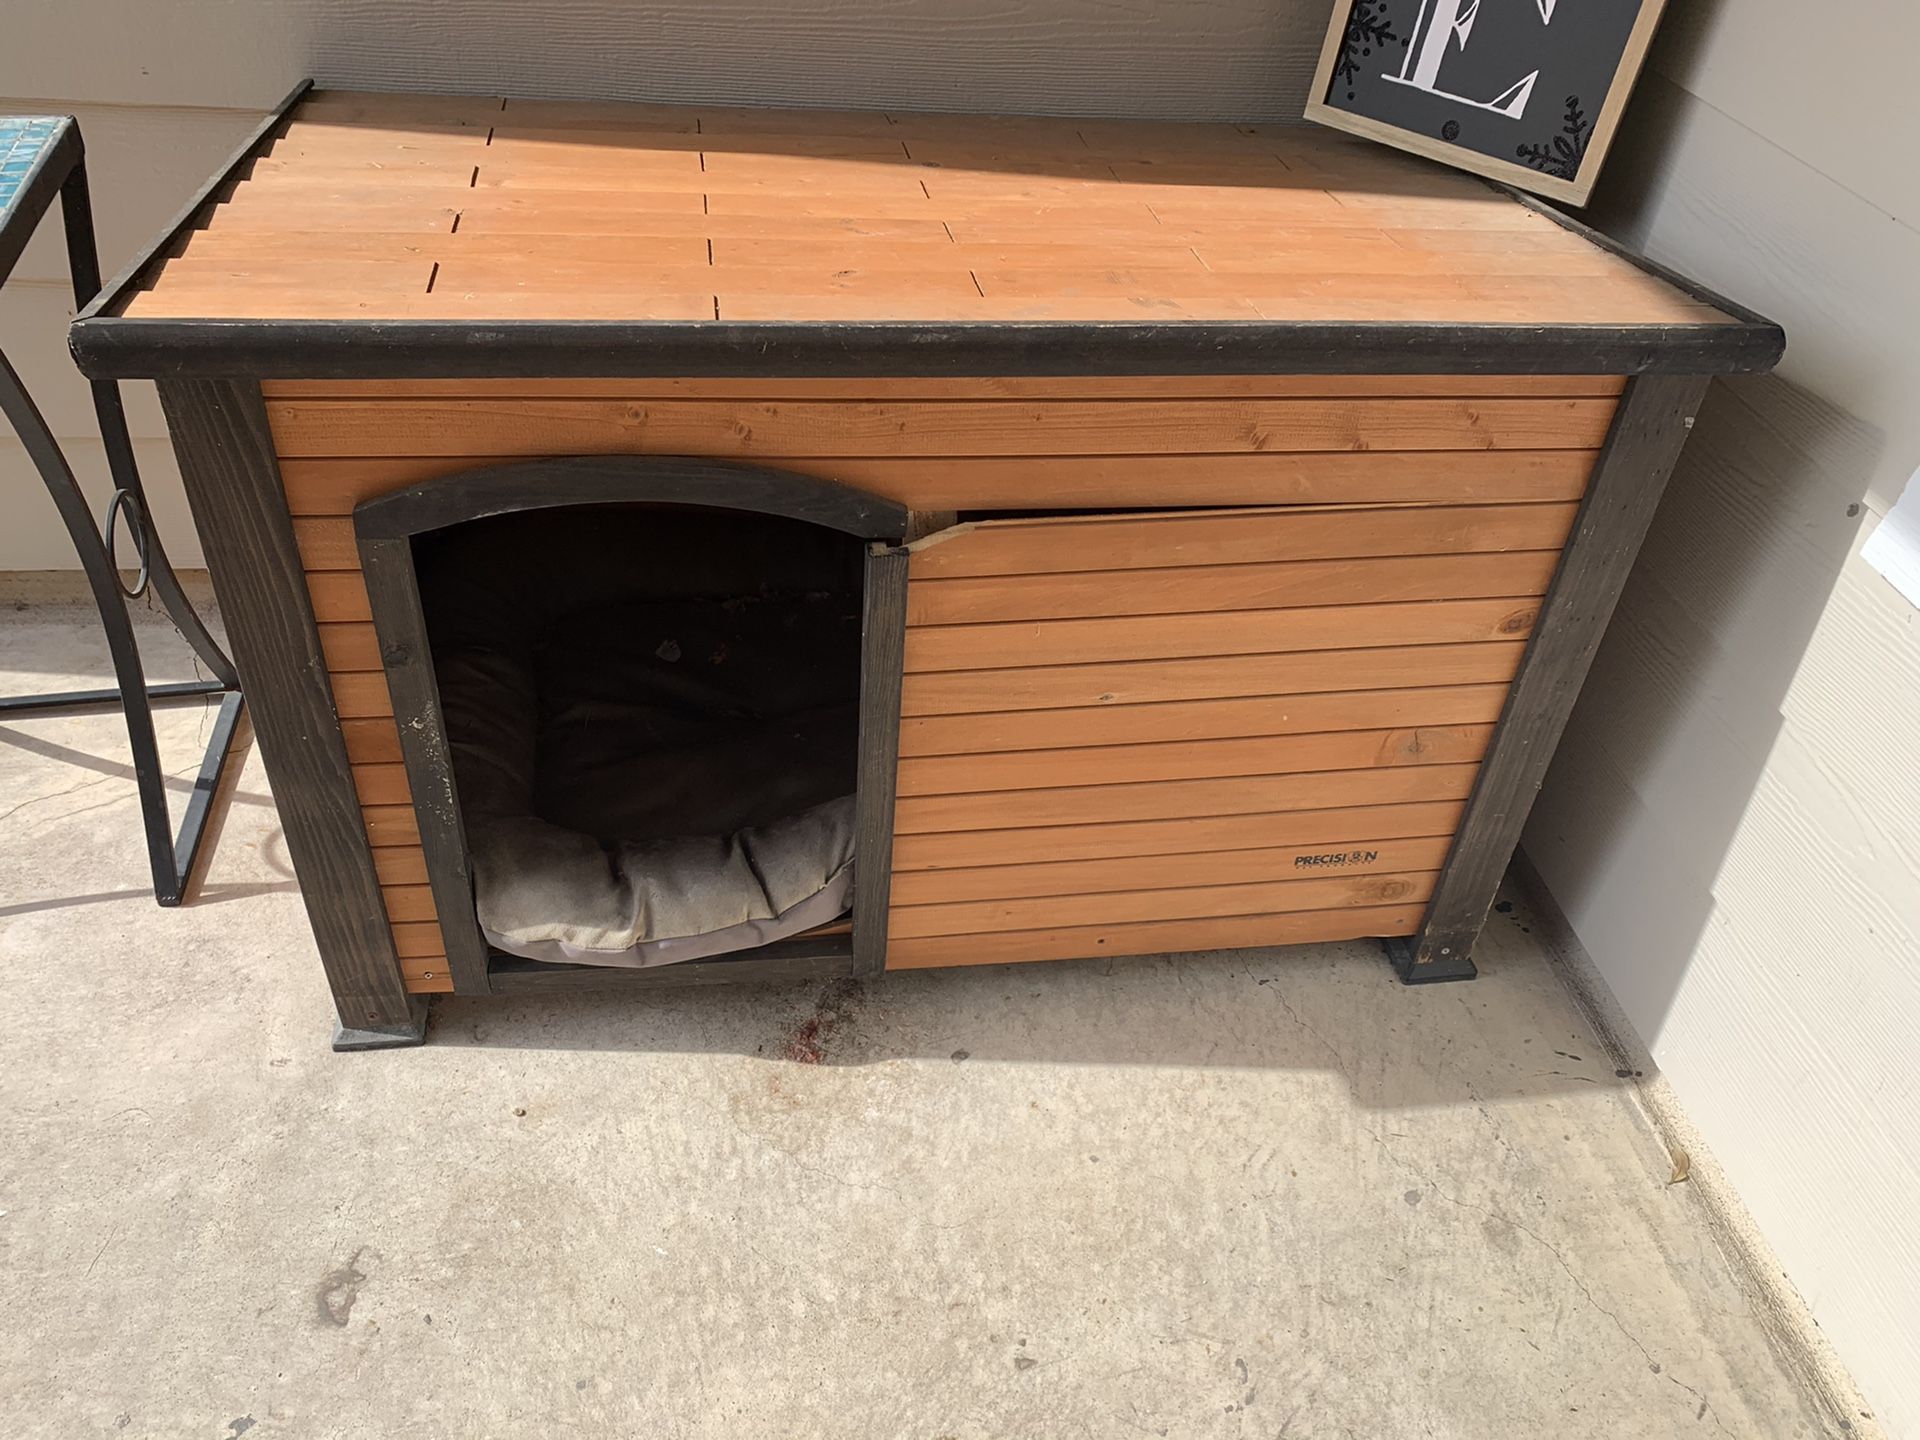 Keep your 4 legged friend warm! (Dog house)